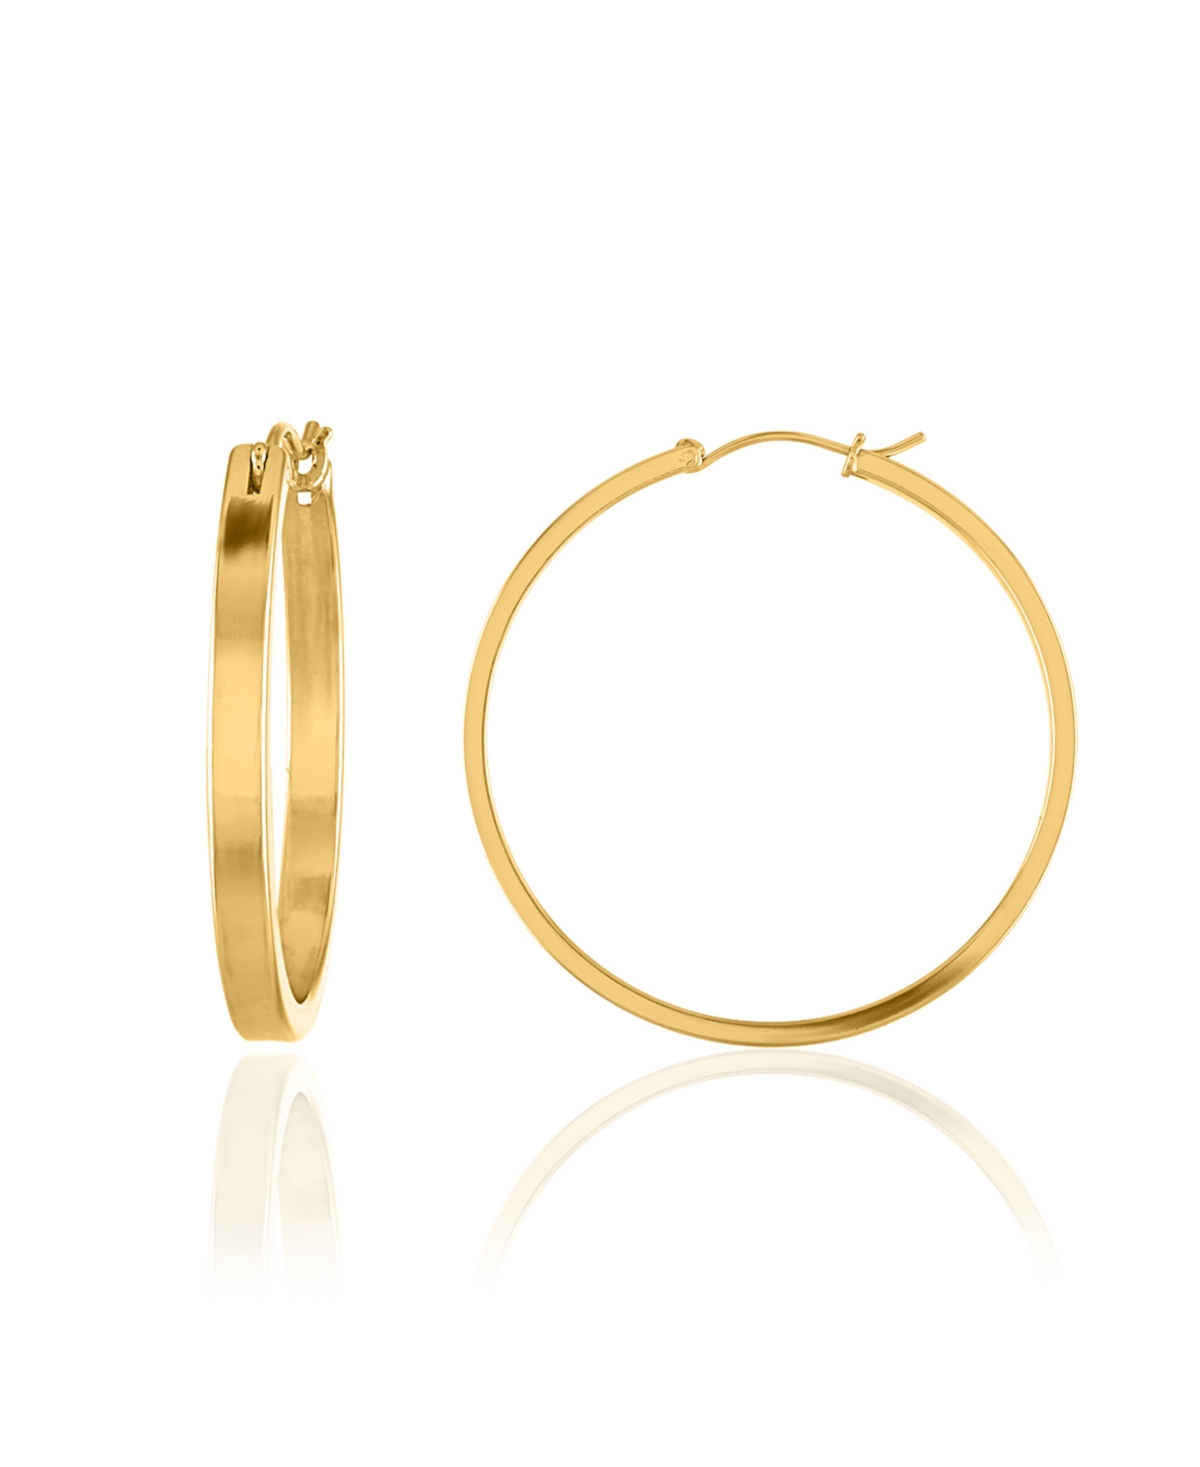 Women's Shiny Jordan 18K Gold Plated Brass Medium Hoop Earrings, 2" - Gold Tone